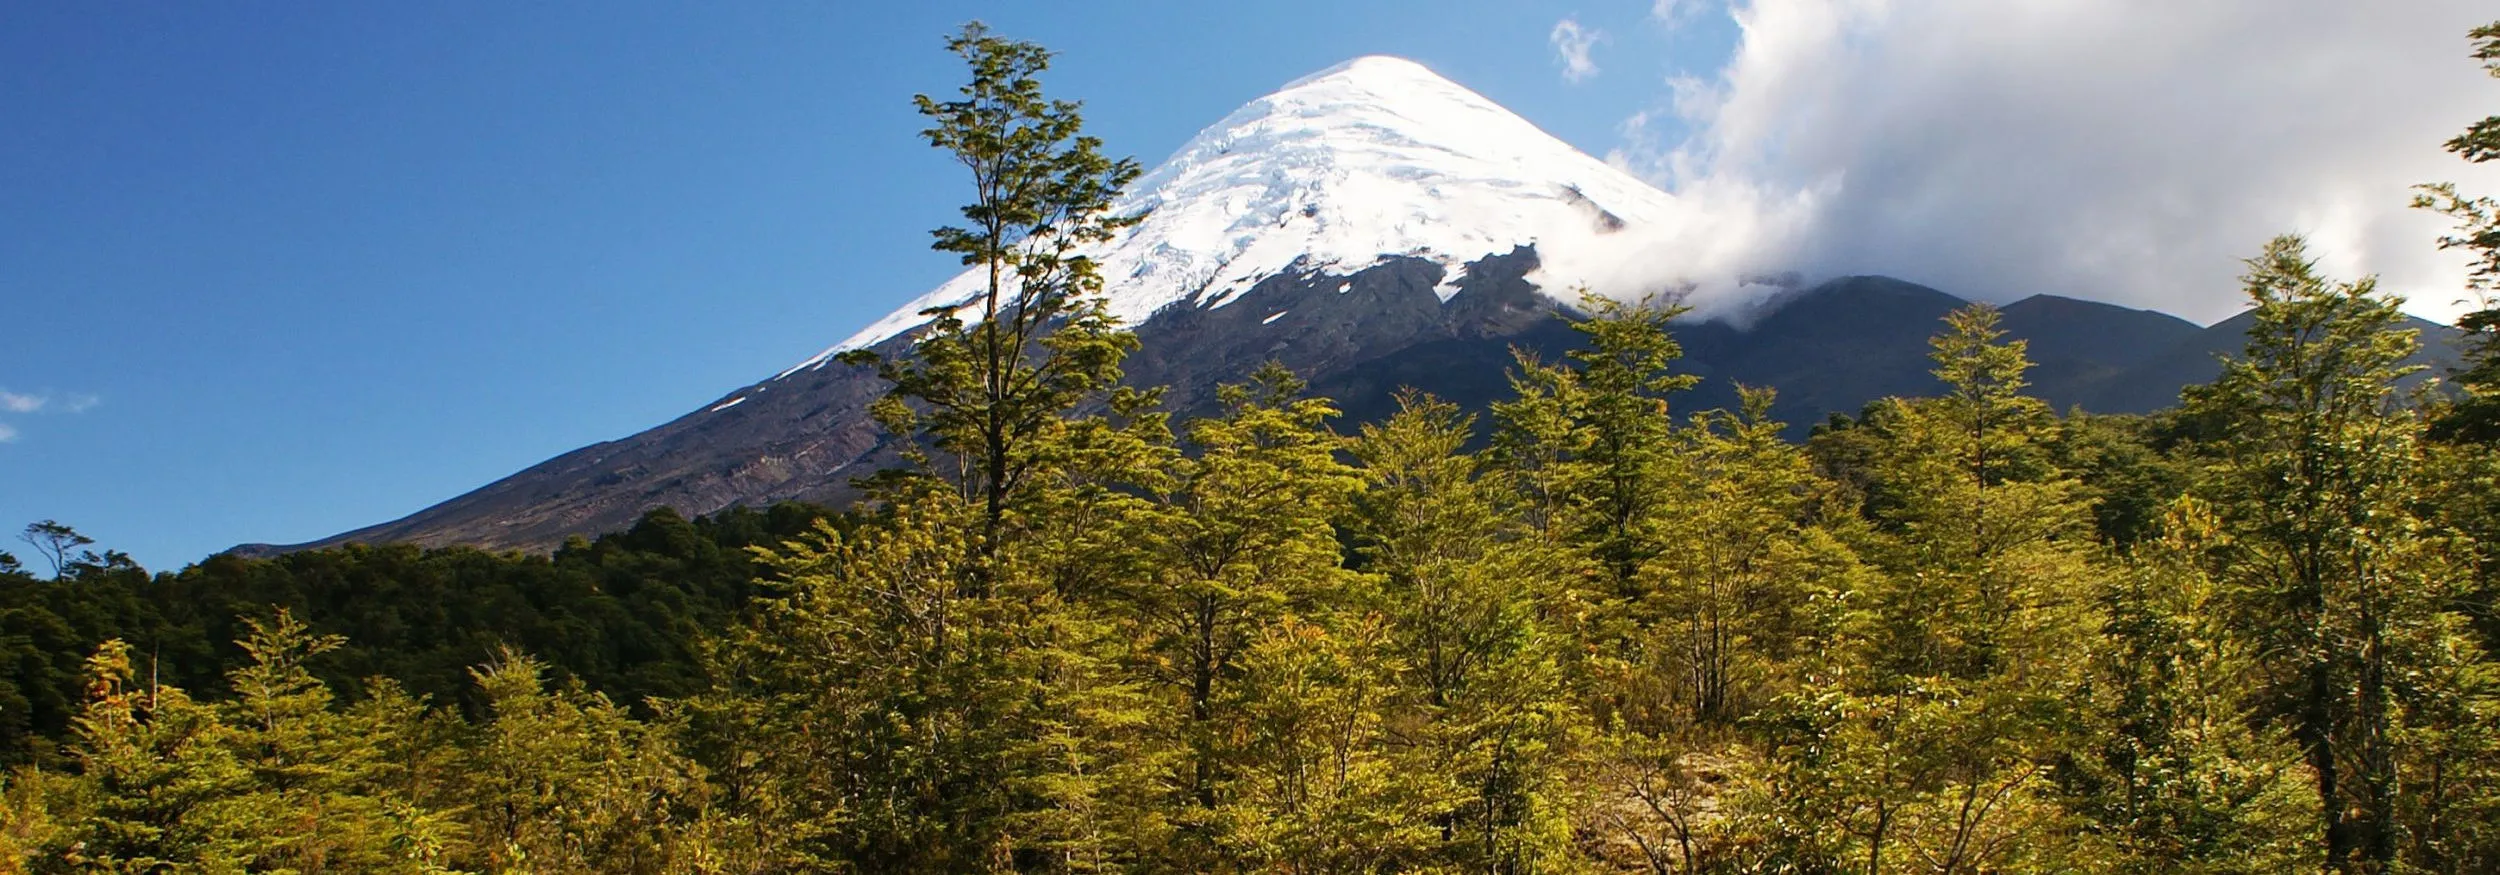 Calbuco & Osorno in Chile, South America | Volcanos - Rated 3.8